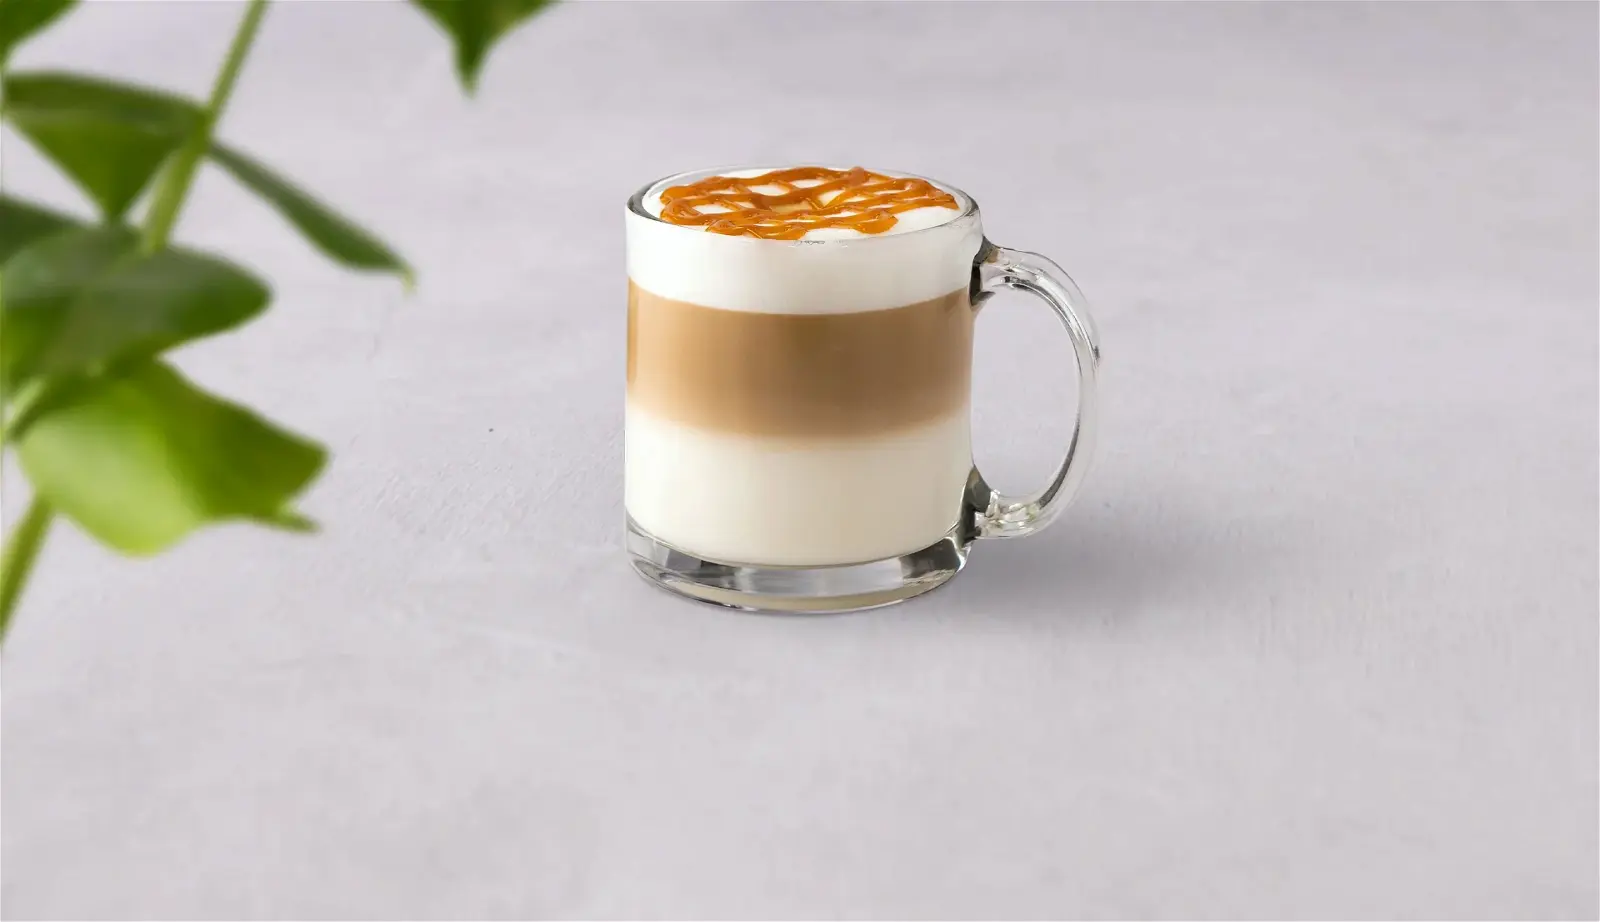 How Much Caffeine Does a Starbucks Caramel Macchiato Have?